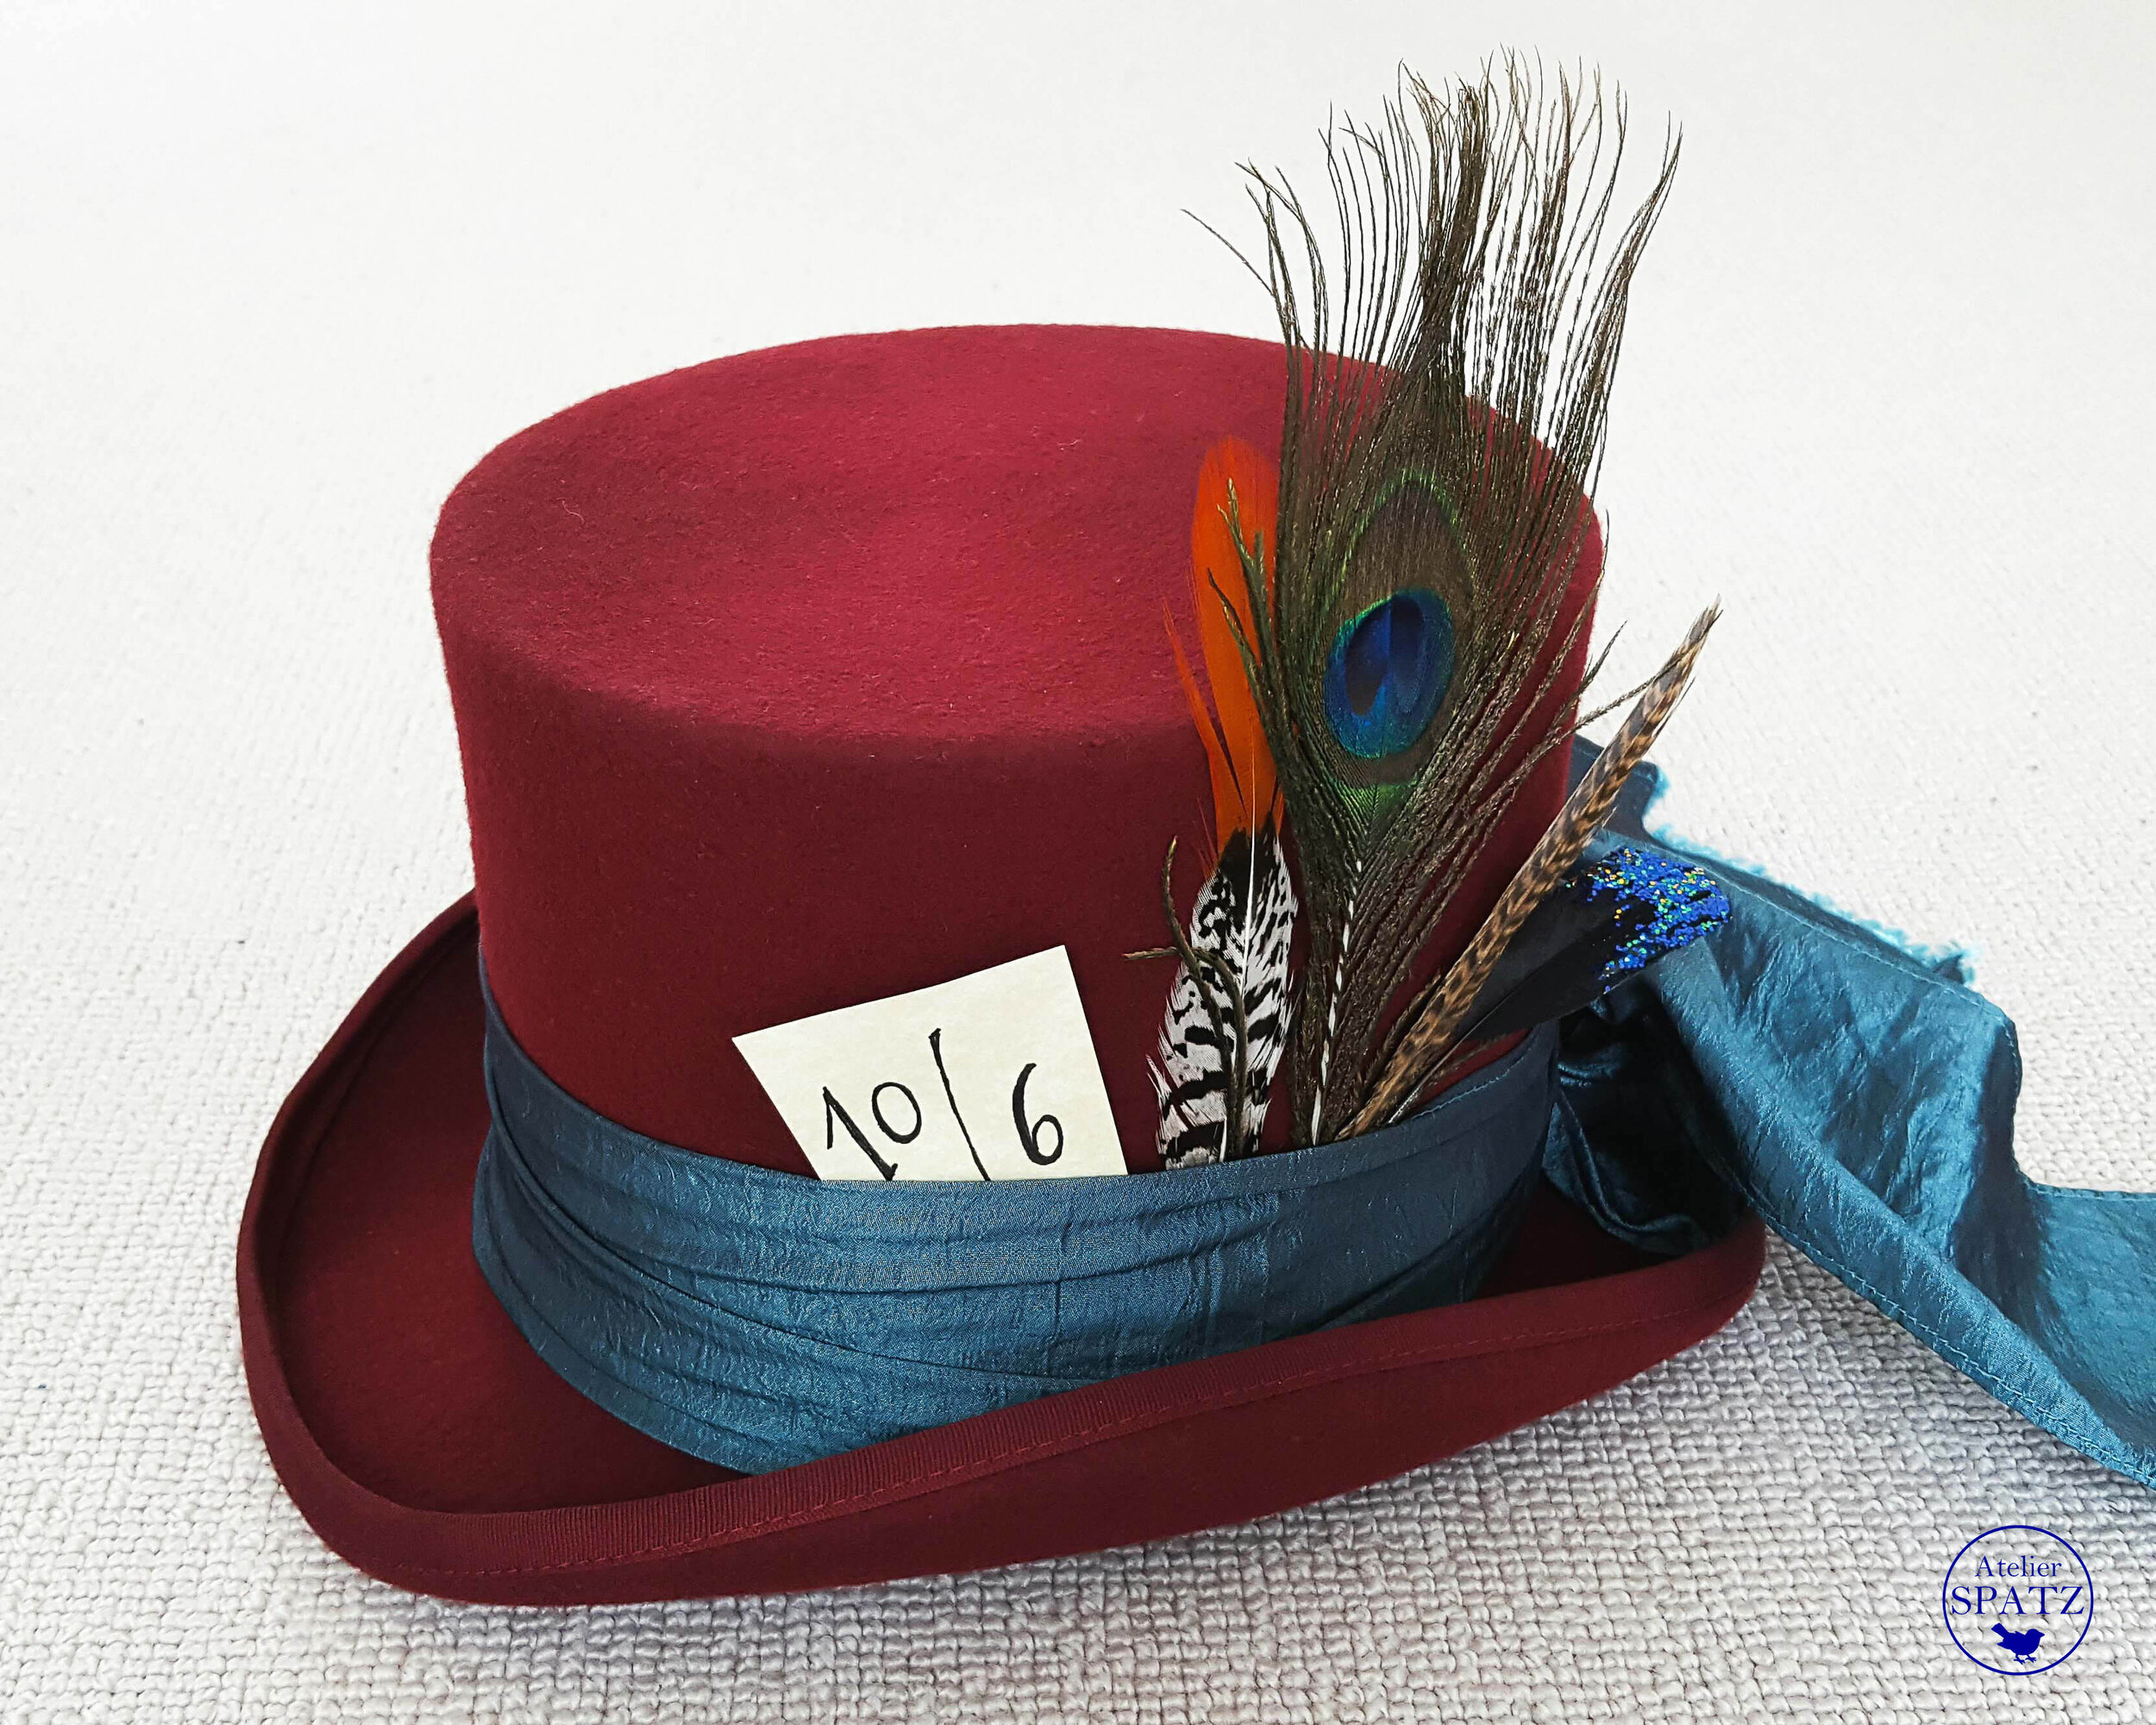 Atelier Spatz Mad Hatter Wool Top Hat